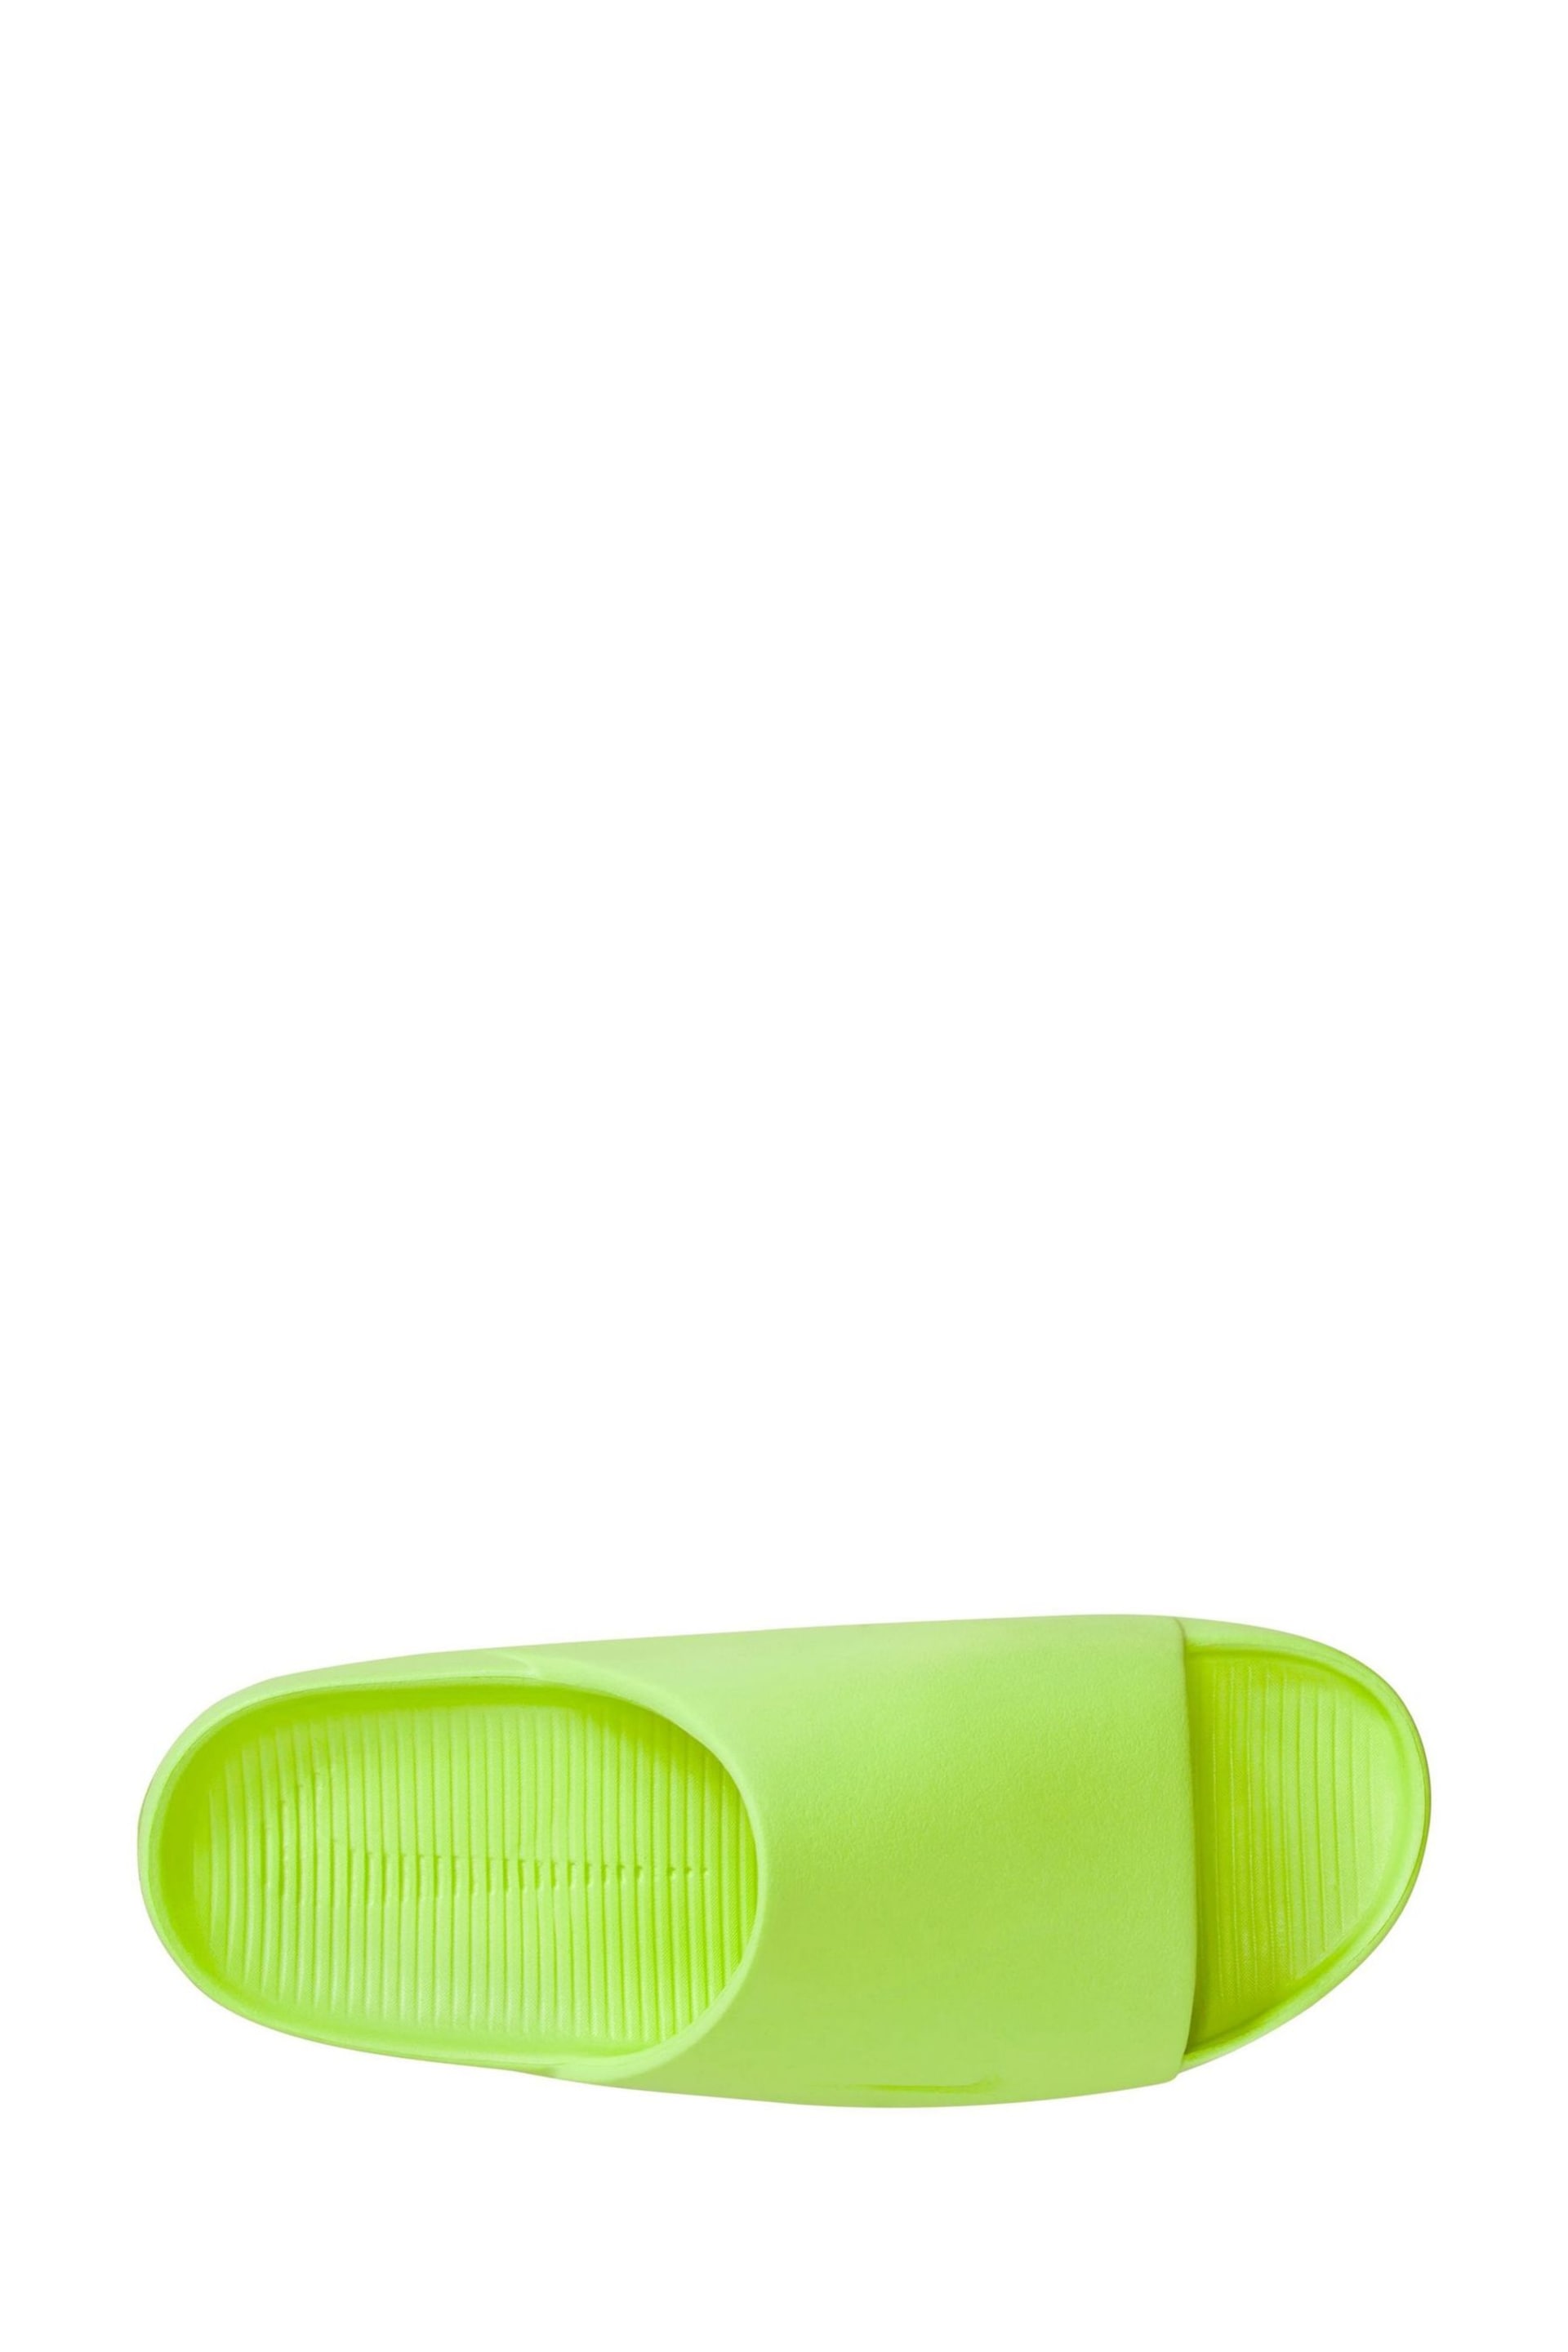 Nike Yellow Calm Slides - Image 5 of 10